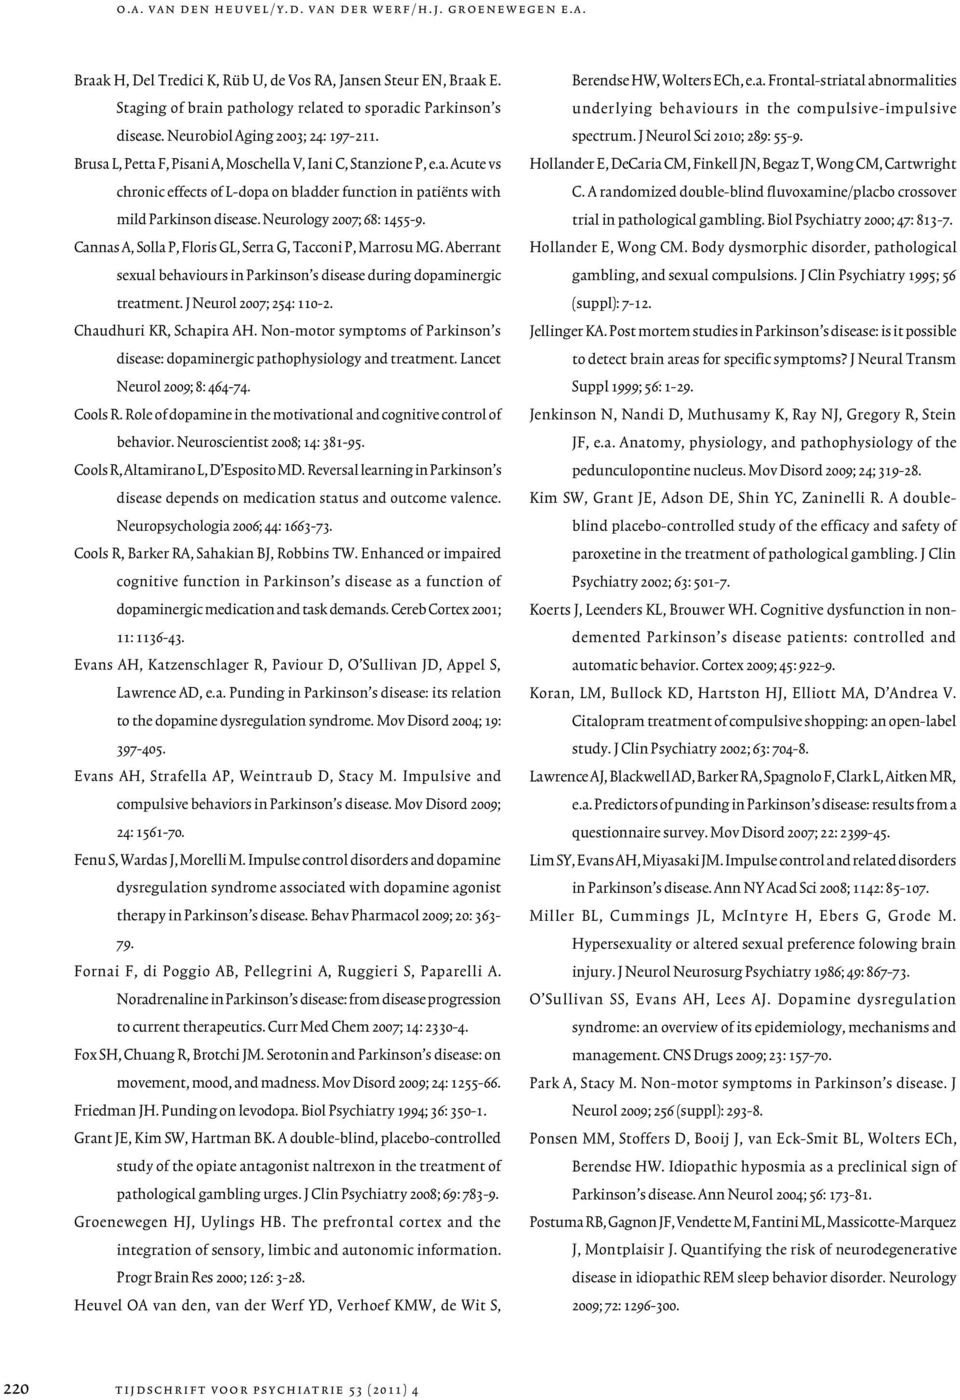 Neurology 2007; 68: 1455-9. Cannas A, Solla P, Floris GL, Serra G, Tacconi P, Marrosu MG. Aberrant sexual behaviours in Parkinson s disease during dopaminergic treatment. J Neurol 2007; 254: 110-2.